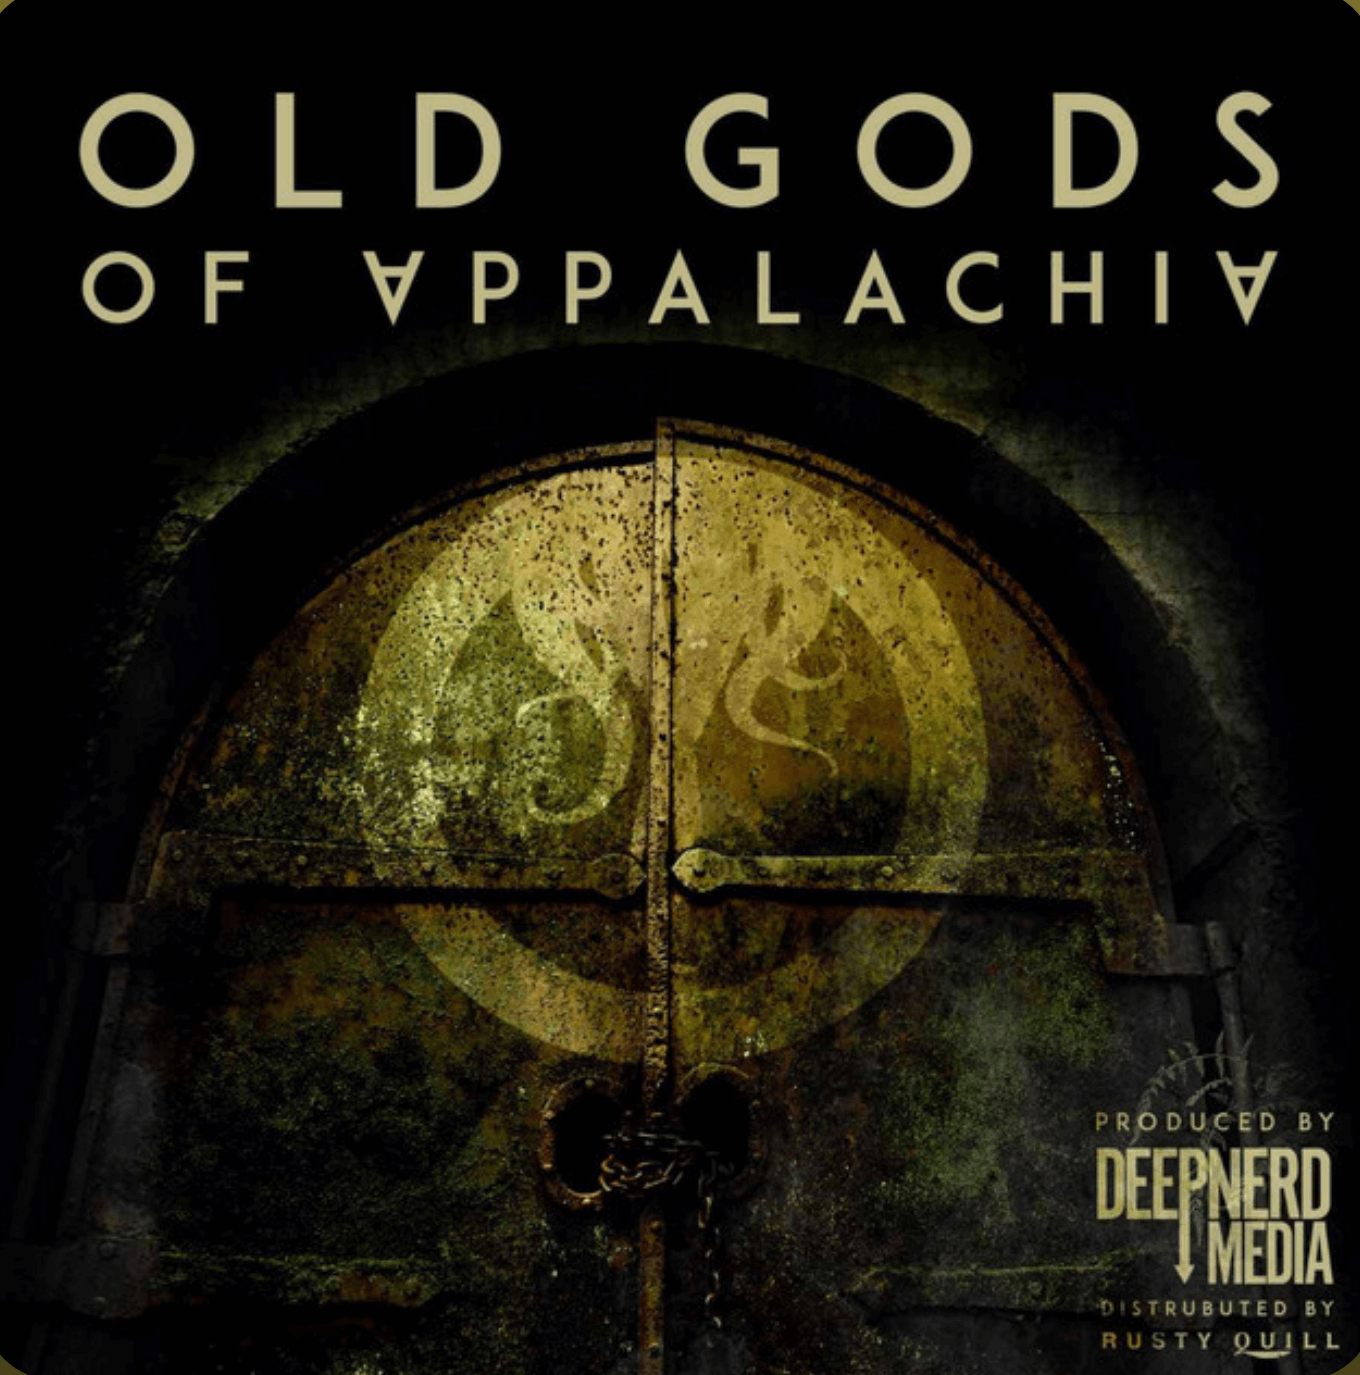 Old Gods of Appalachia 